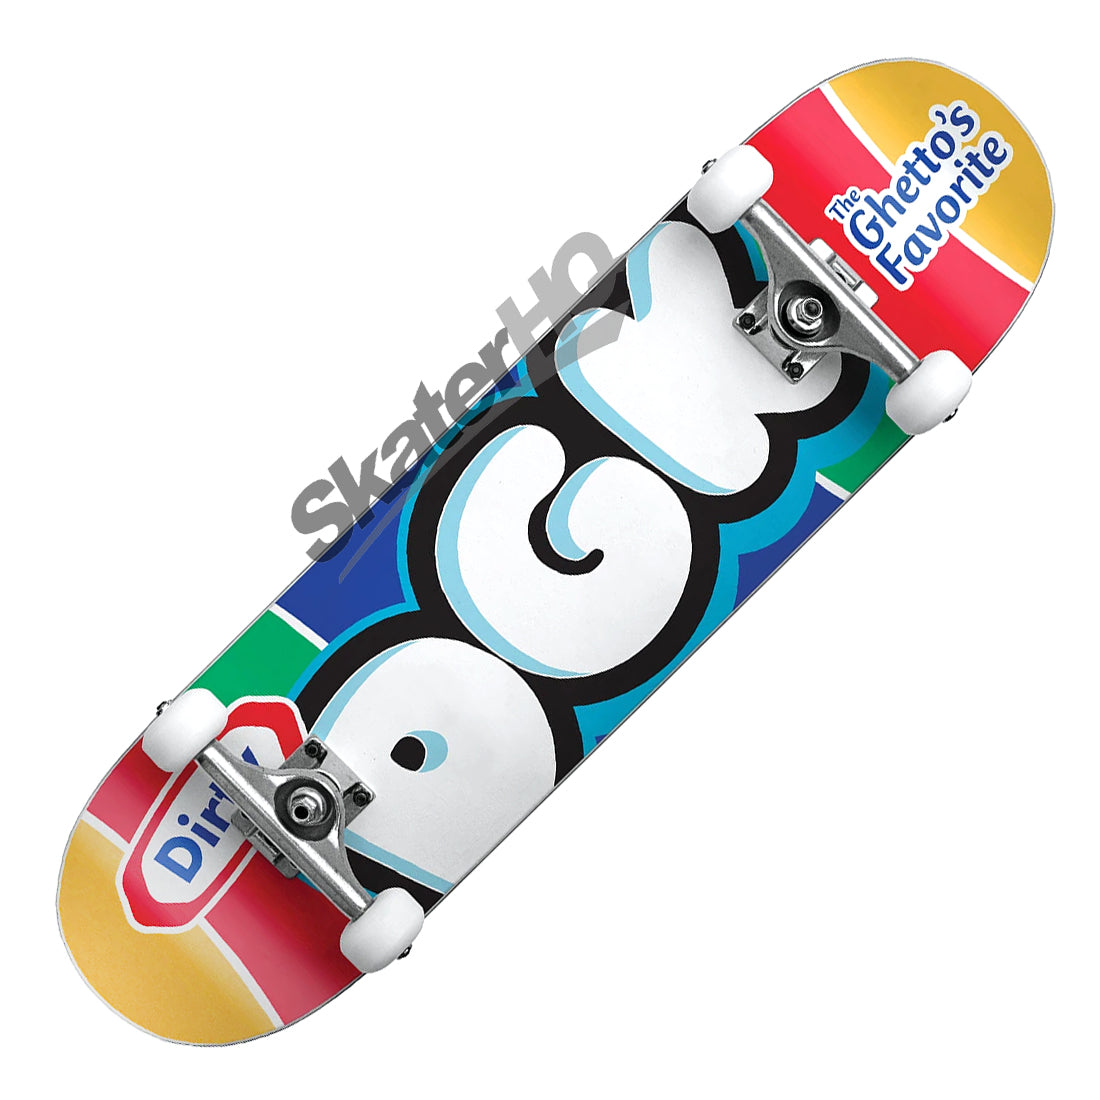 DGK Puff 7.75 Complete - Multicolour Skateboard Completes Modern Street